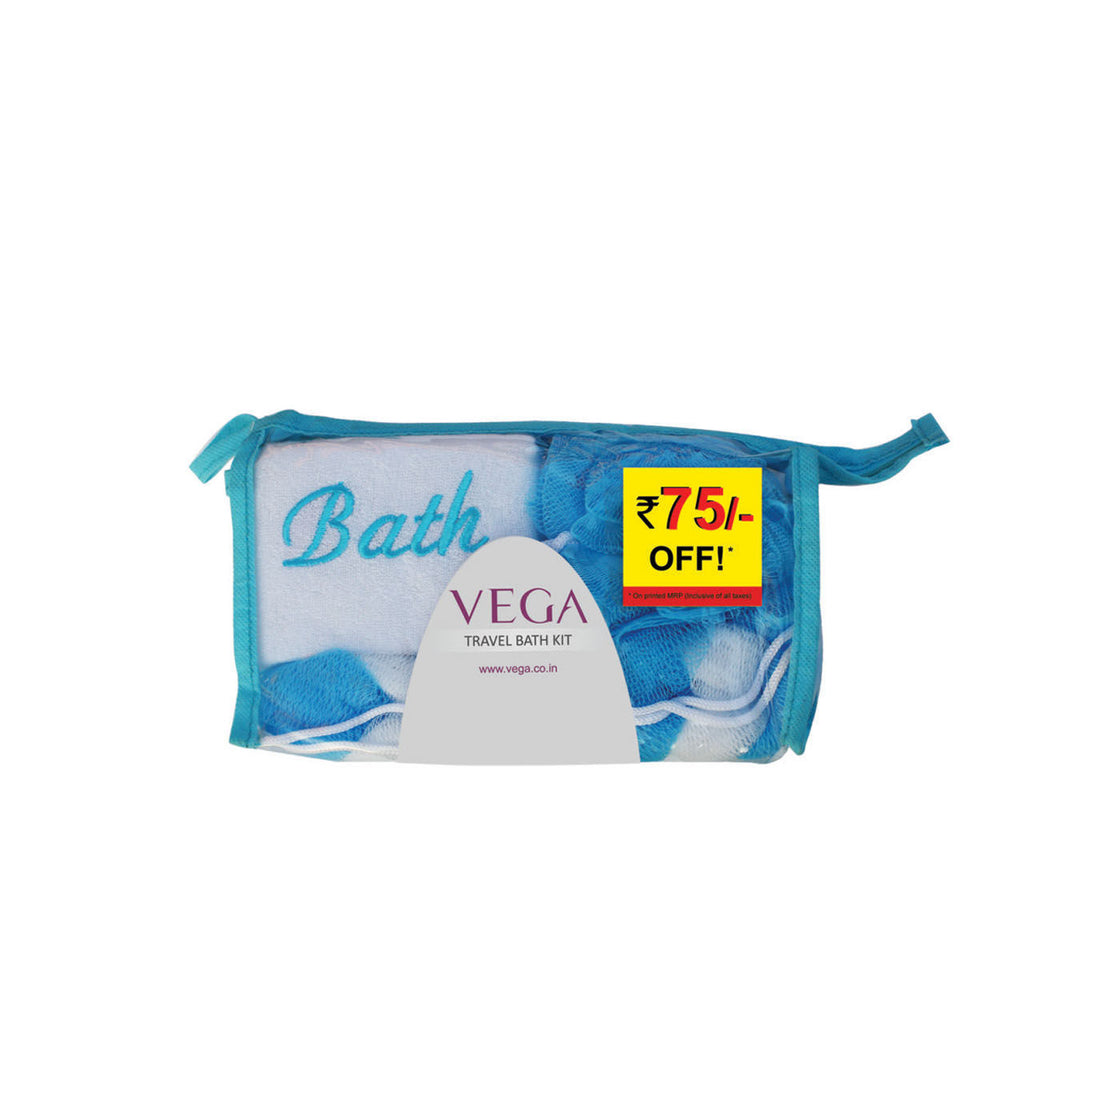 Vega Travel Bath Kit (Bas-02) Rs. 75 Off (Color May Vary)